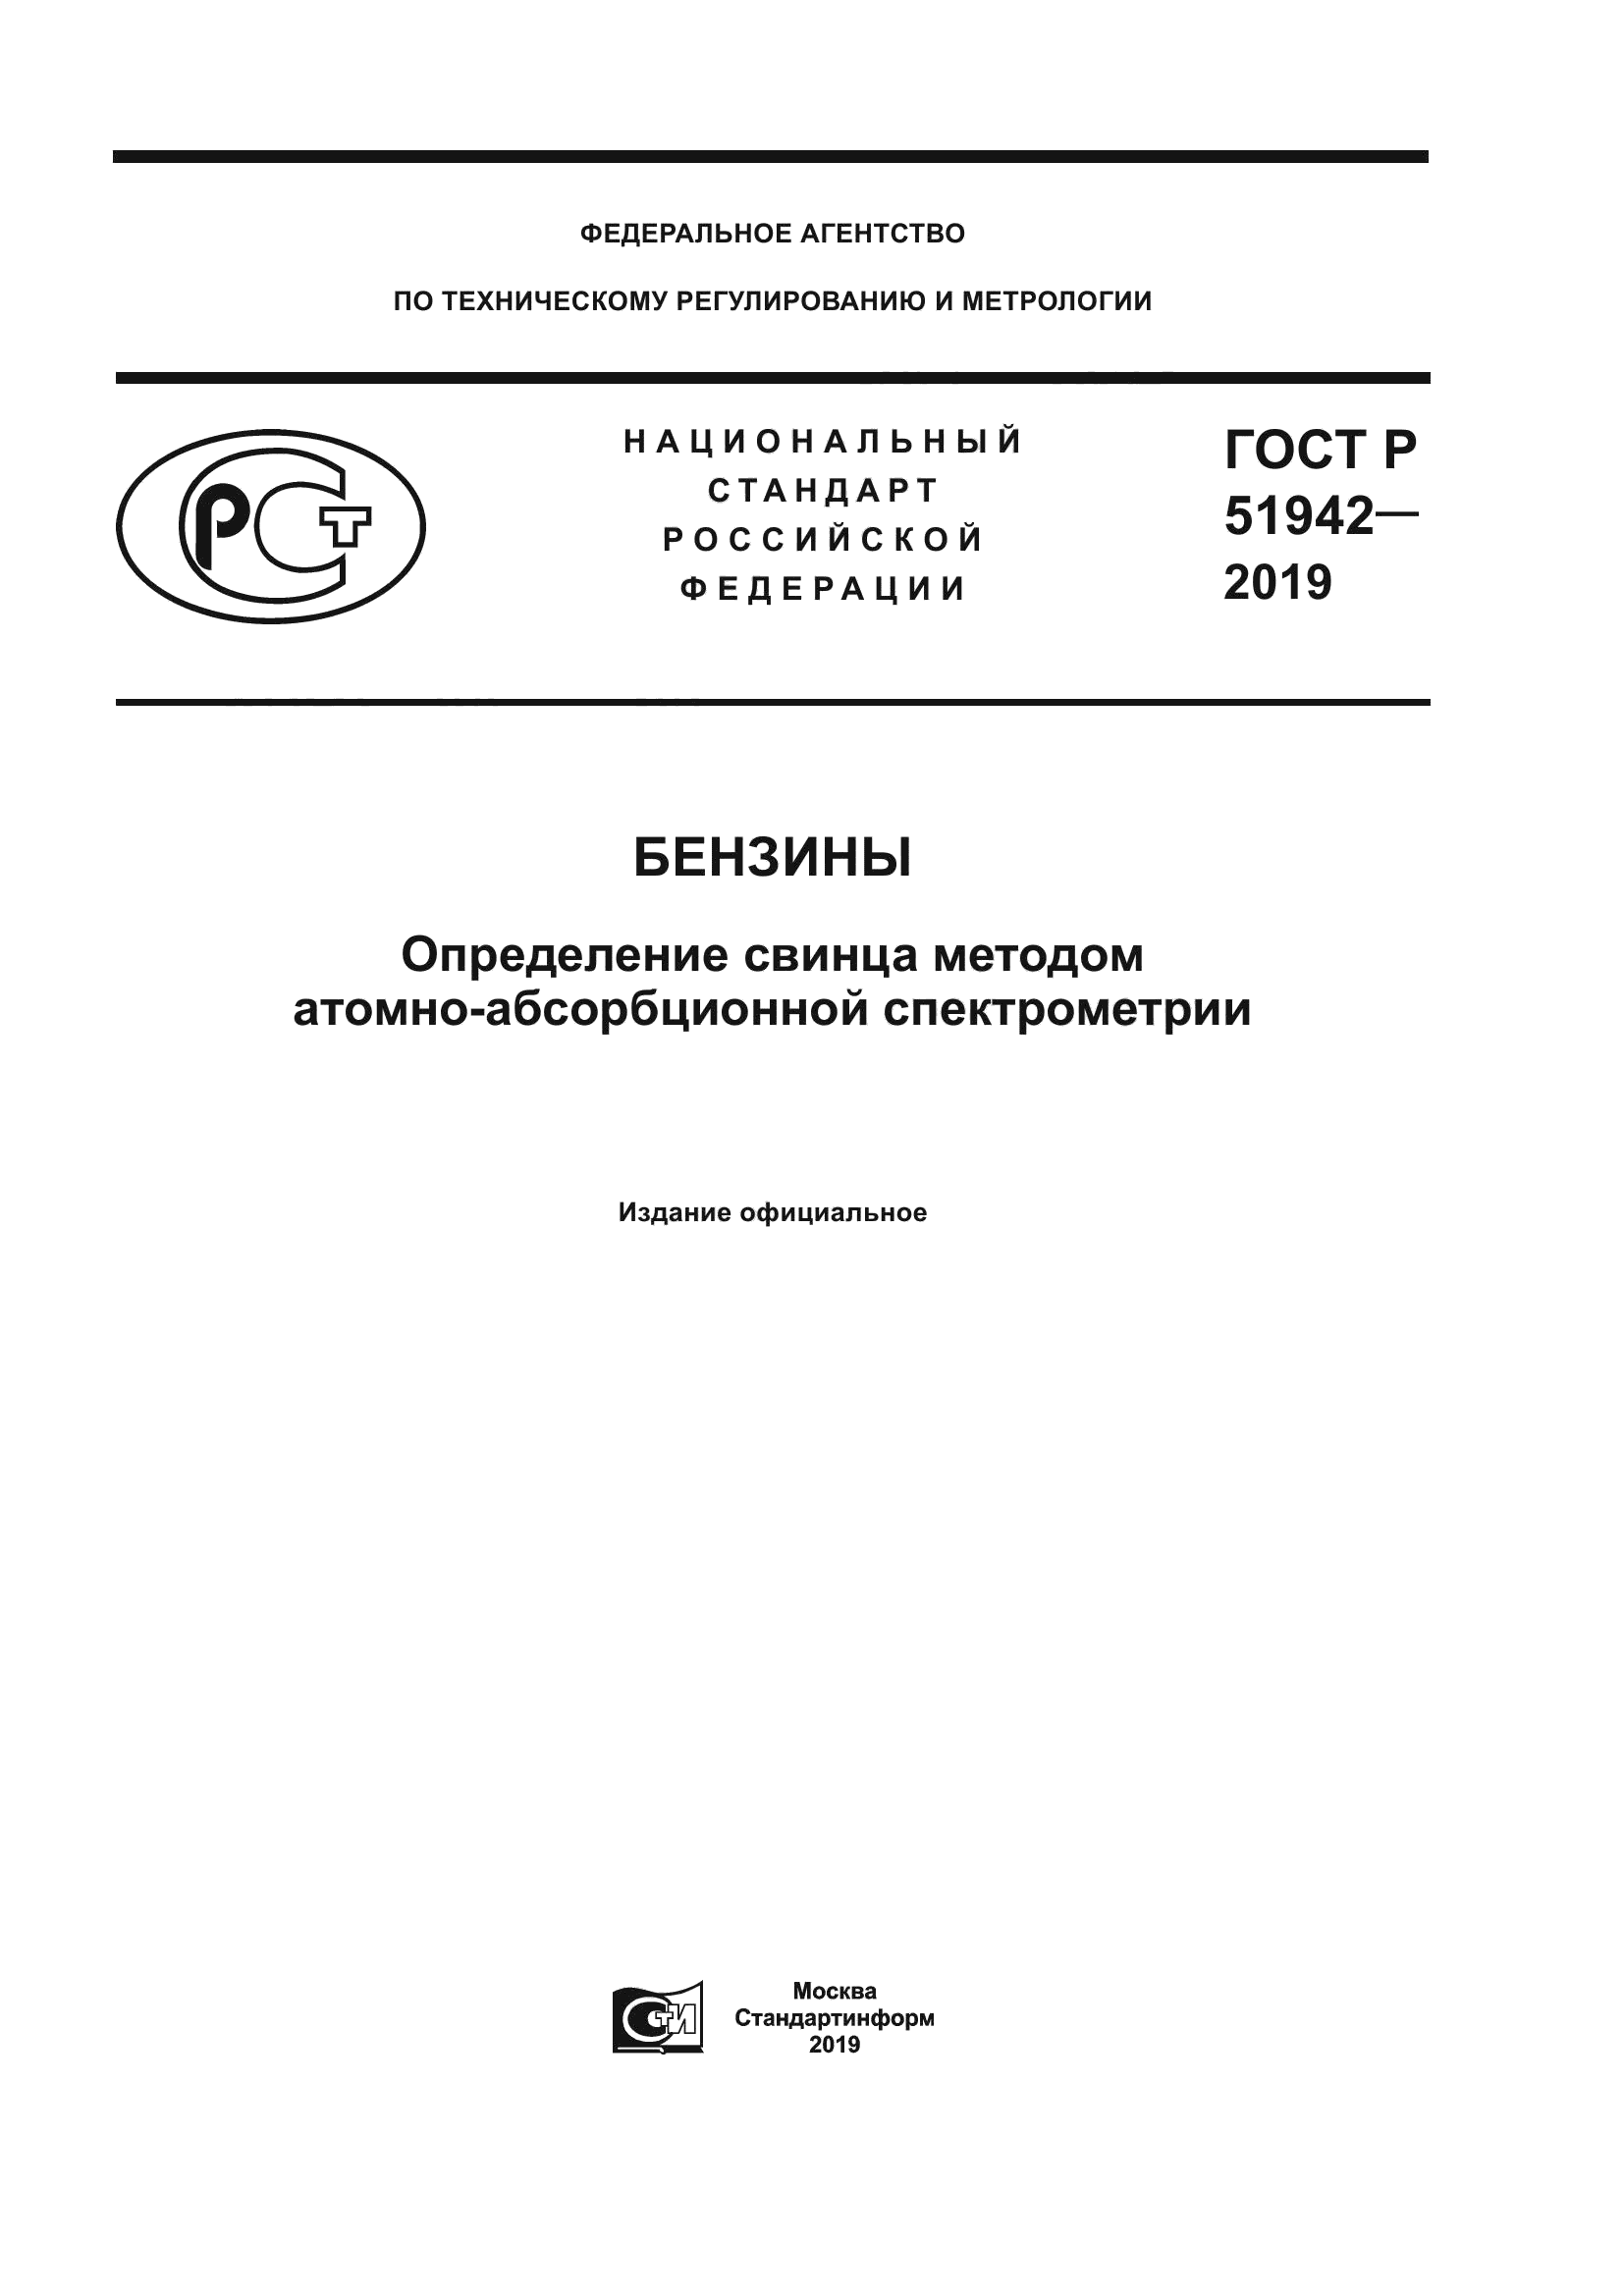 ГОСТ Р 51942-2019